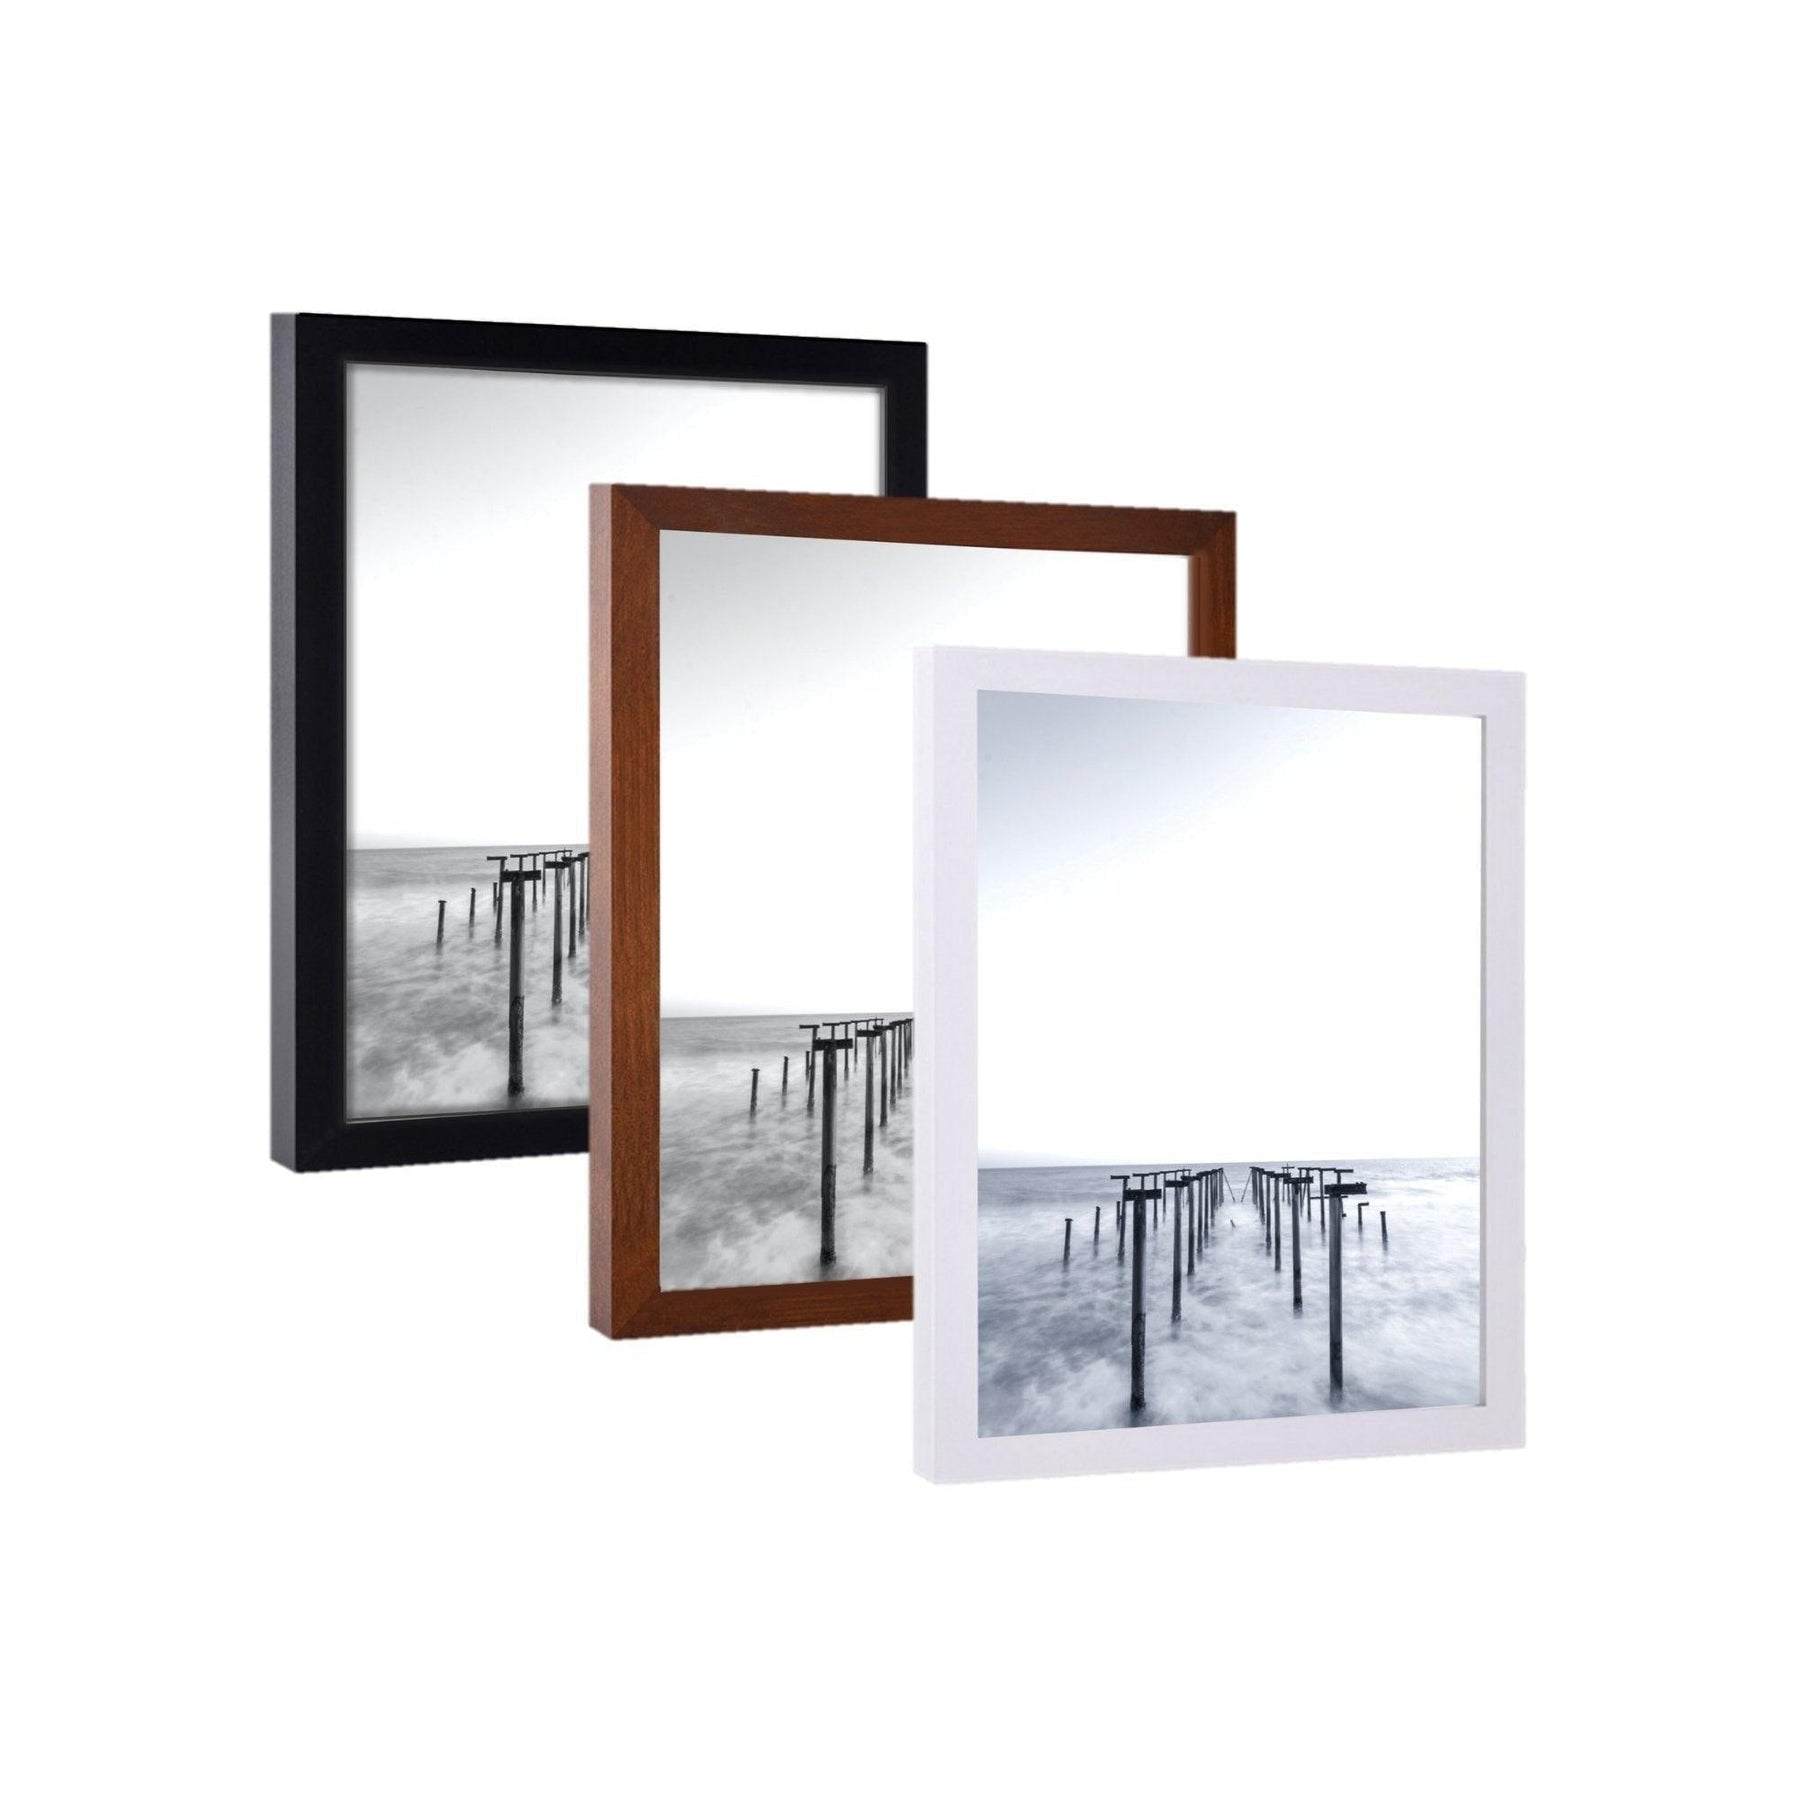 Best Picture Frame sizes for your Home Decor 2020 - Modern Memory Design Picture frames - NJ Frame shop Custom framing